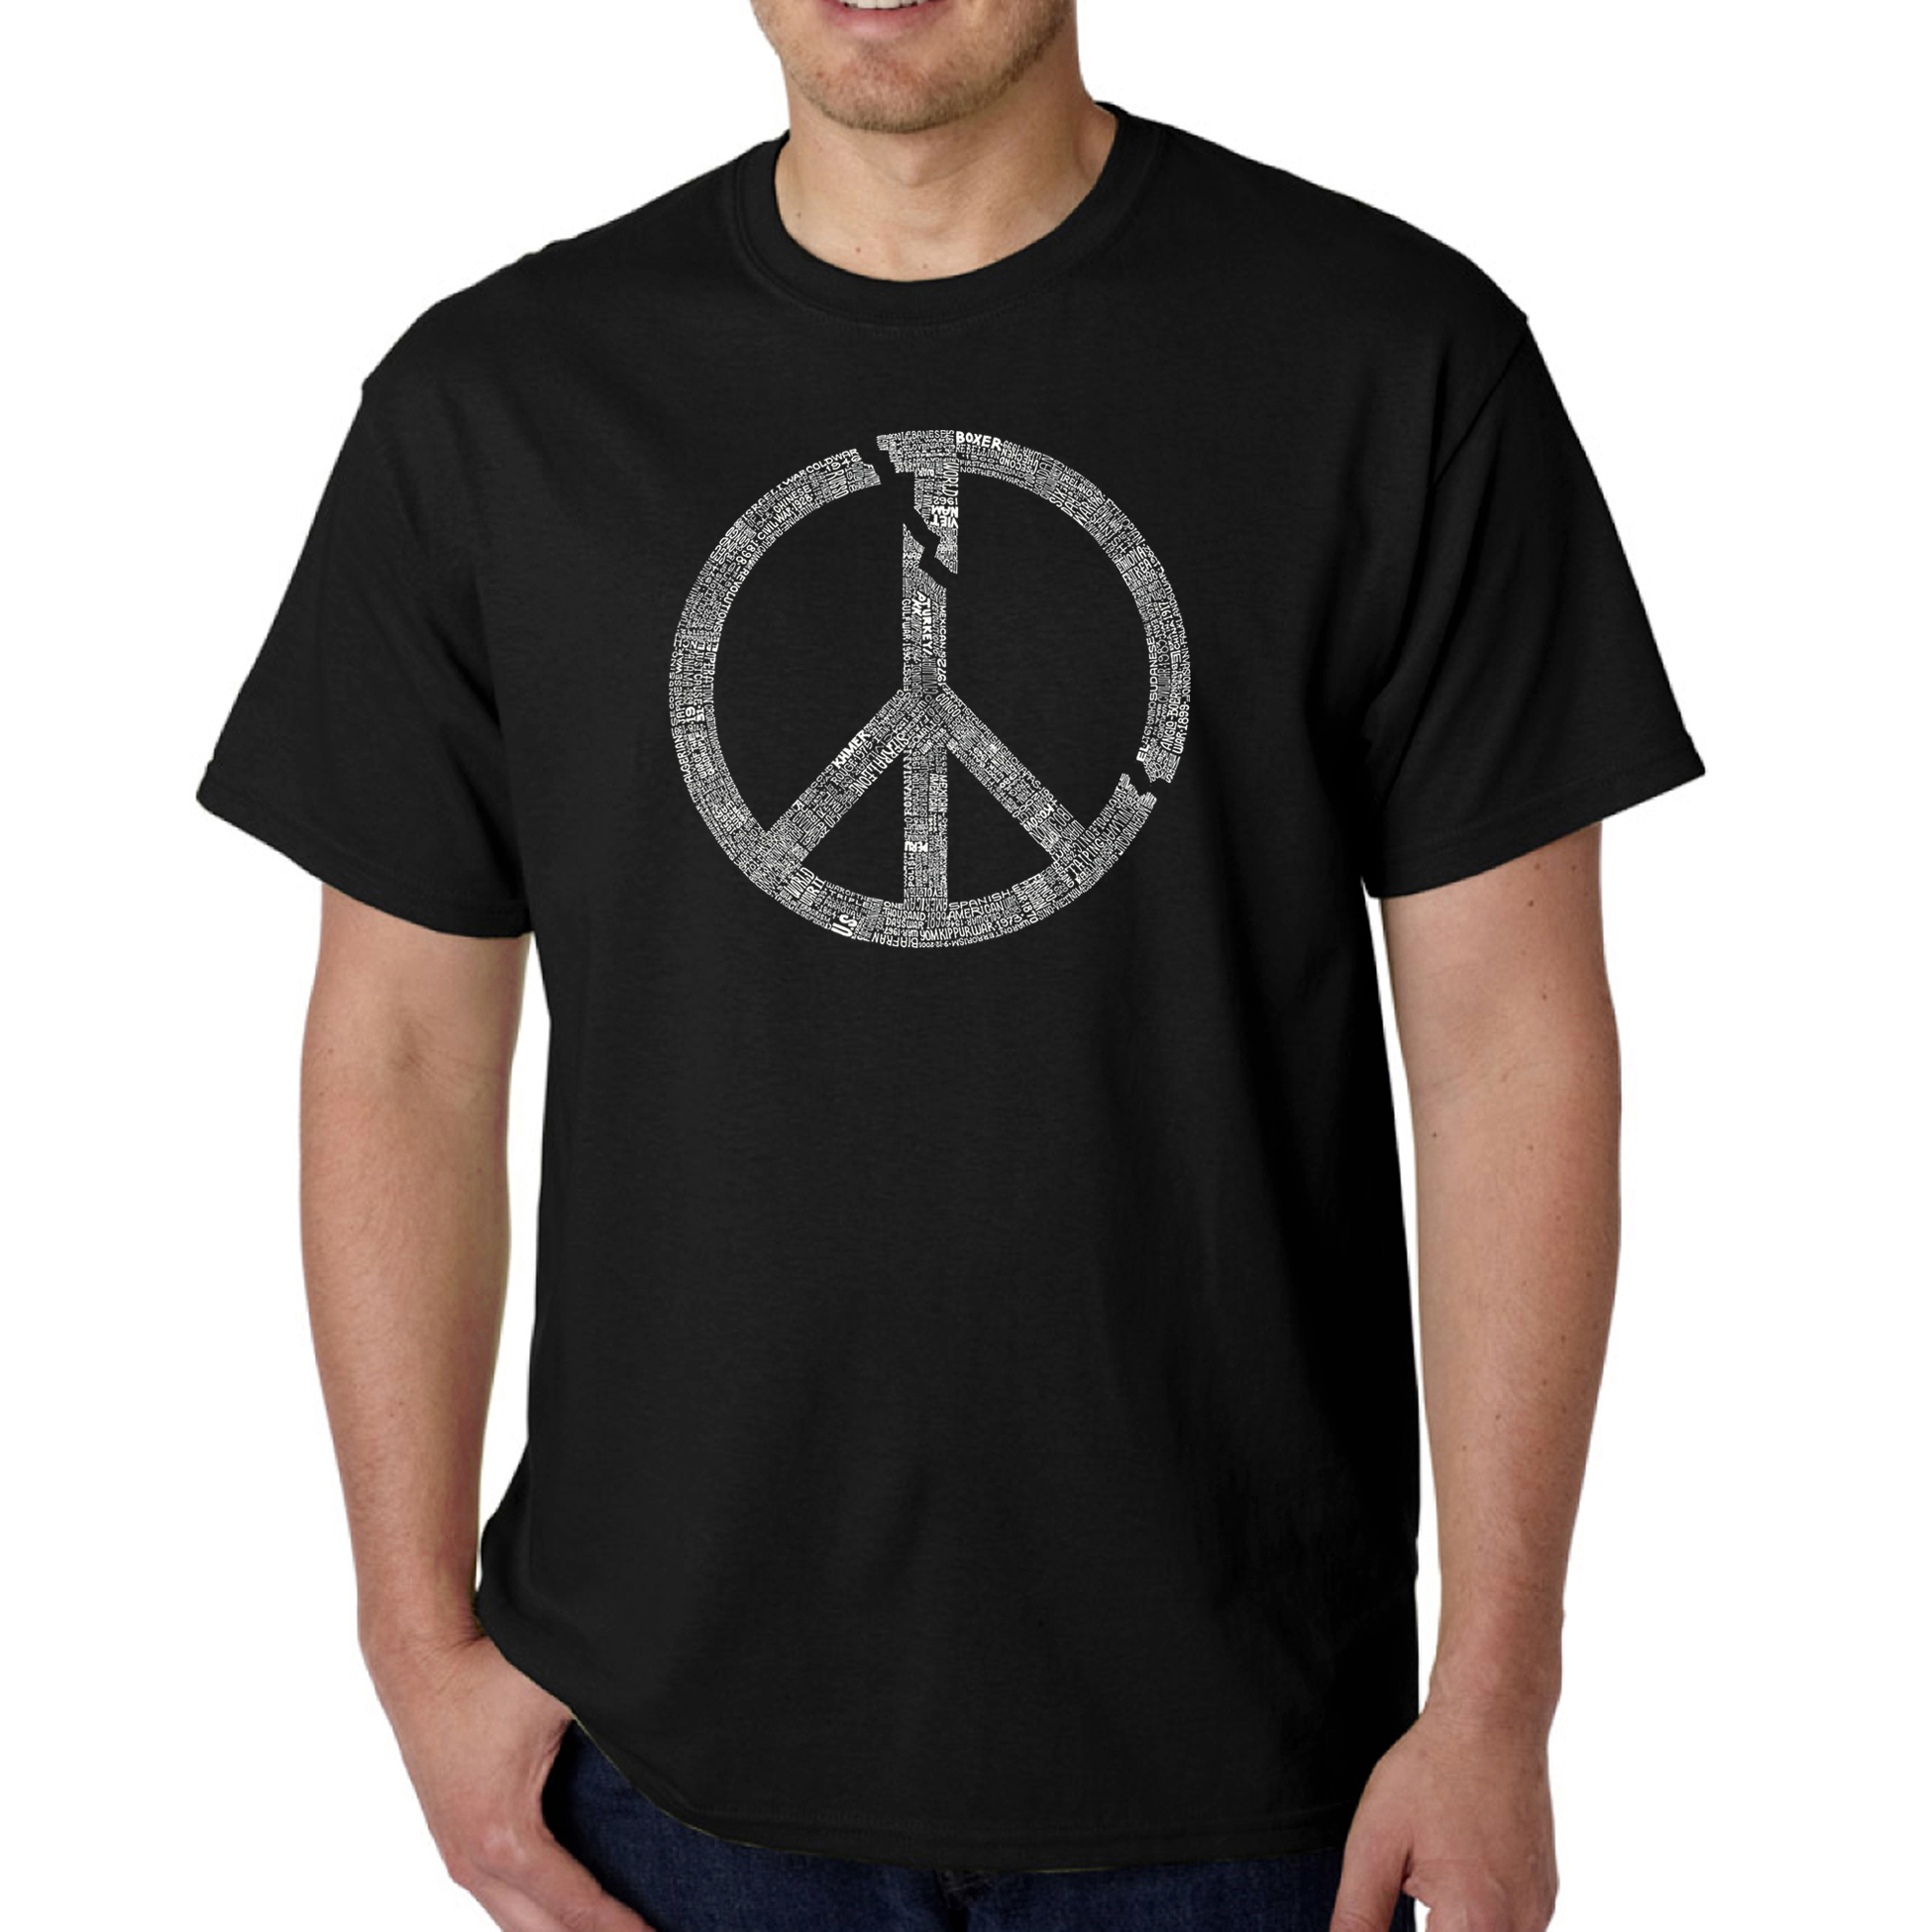 Los Angeles Pop Art Men's Word Art T-Shirt - Every Major World Conflict Since 1770